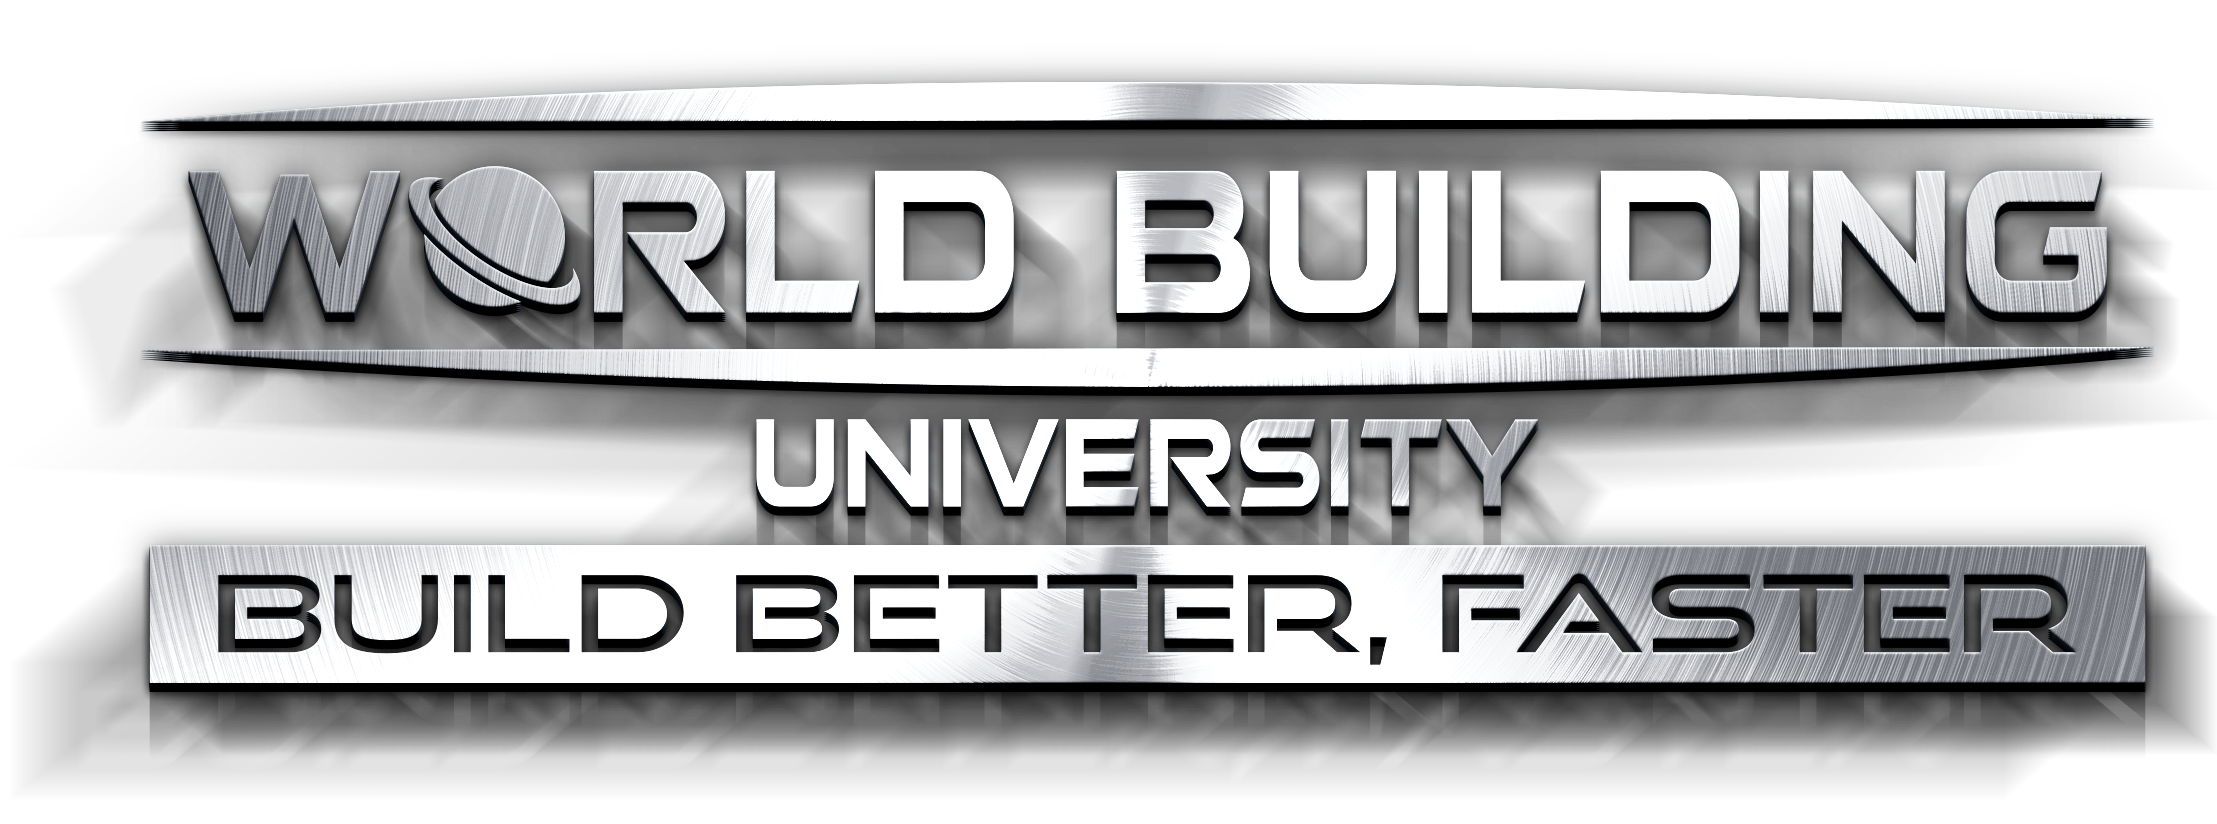 World Building University